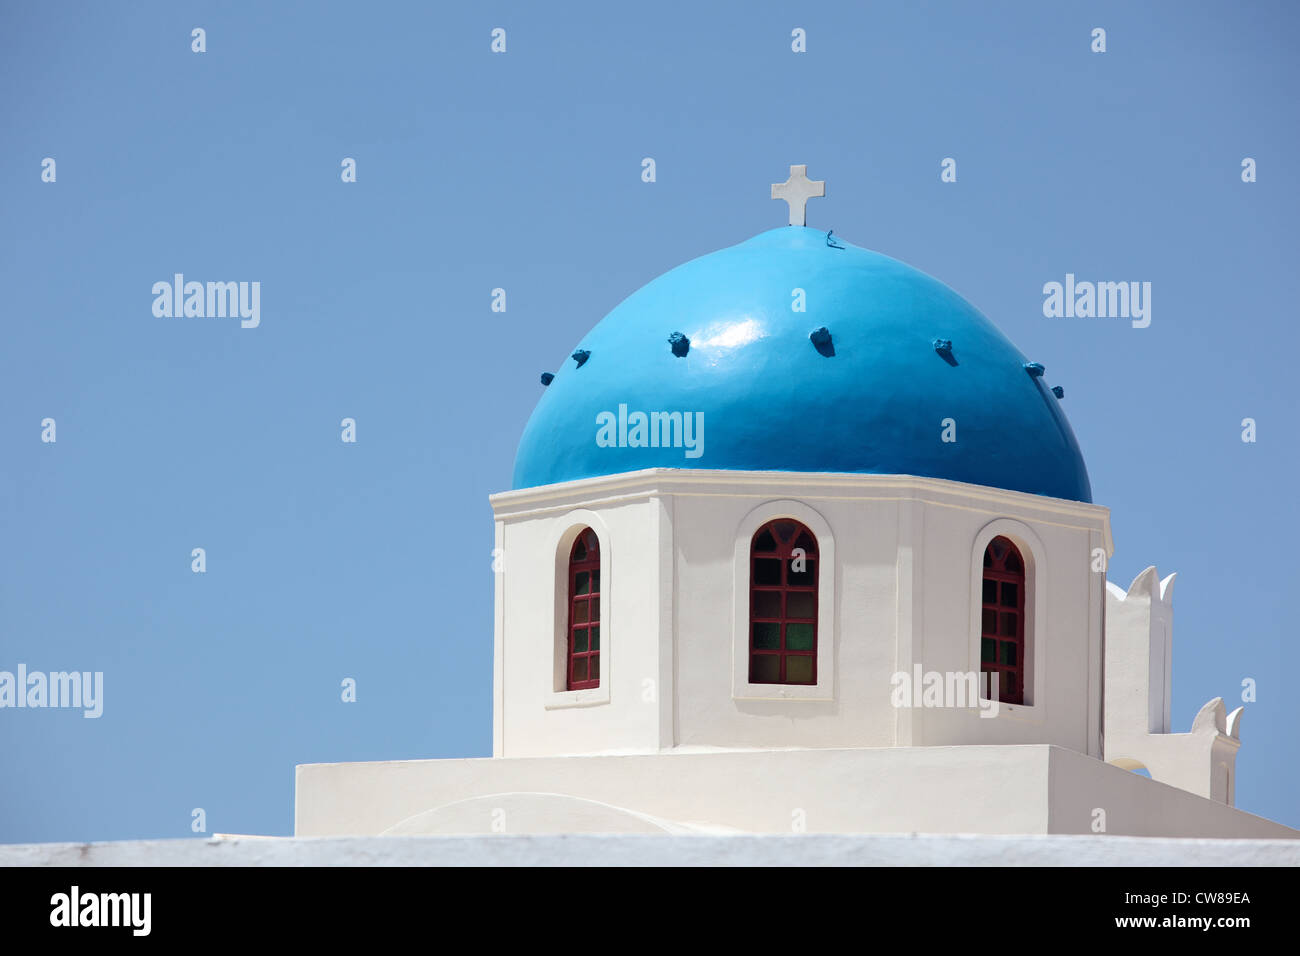 Greece, Cyclades Islands, Santorini, Oia, Caldera Square, Blue dome of Panagia of Platsani church. Stock Photo